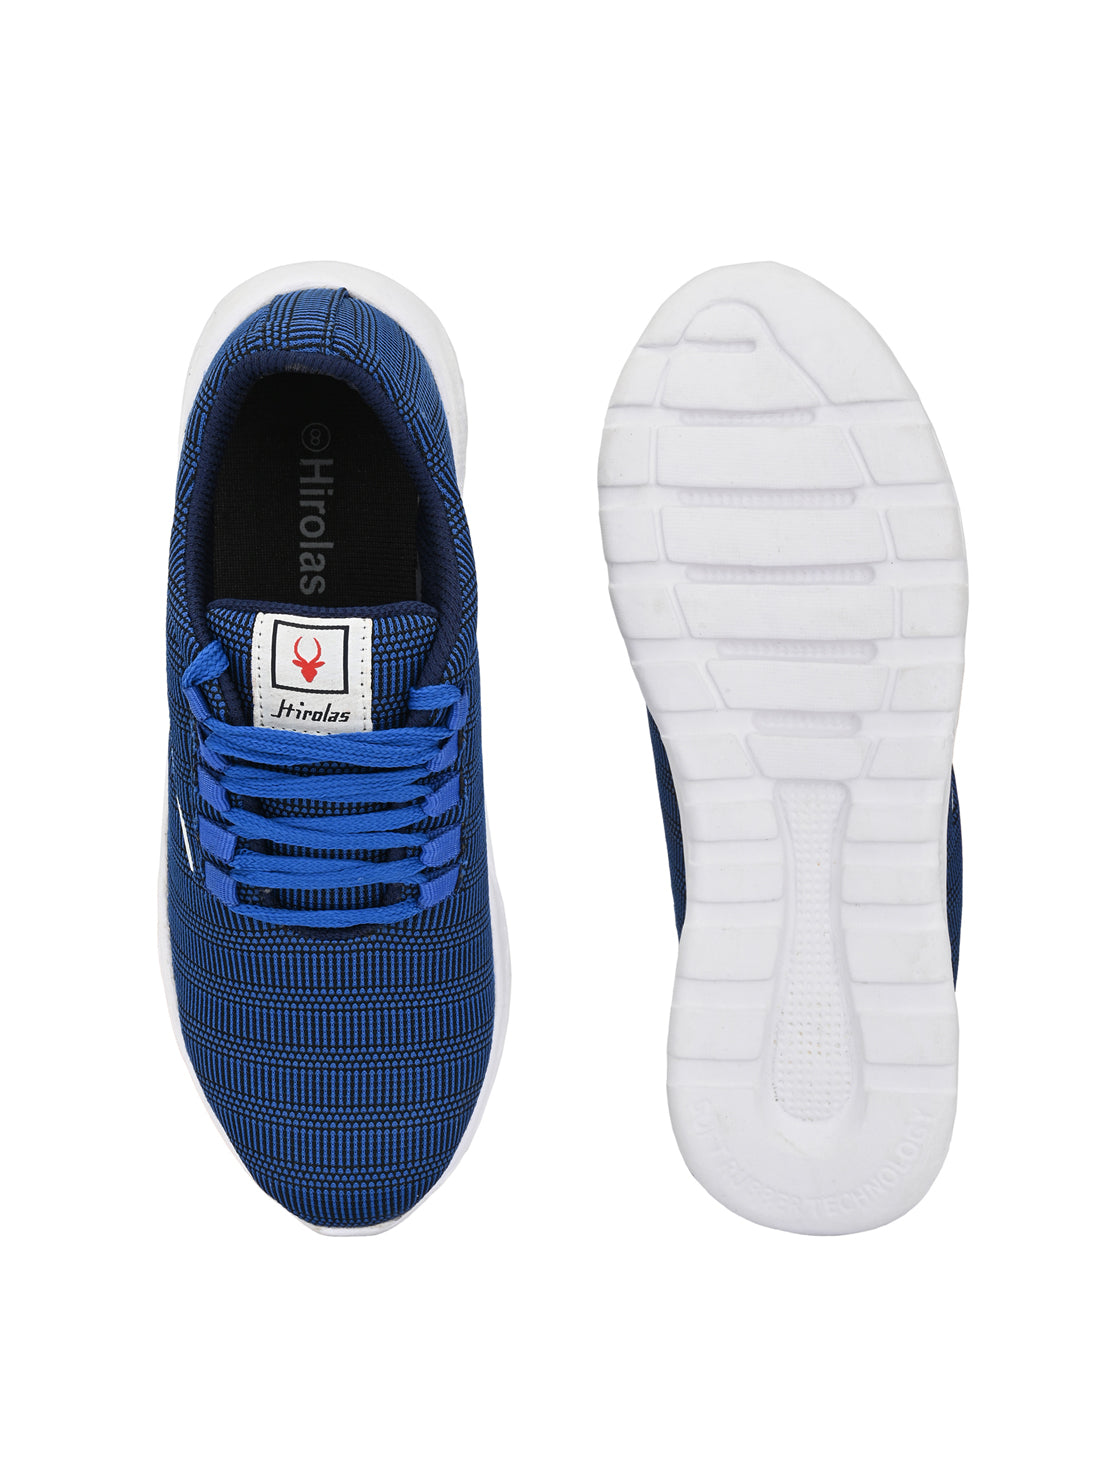 Hirolas® Men's Blue Knitted Running/Walking/Gym Lace Up Sneaker Sport Shoes (HRL1924RBU)